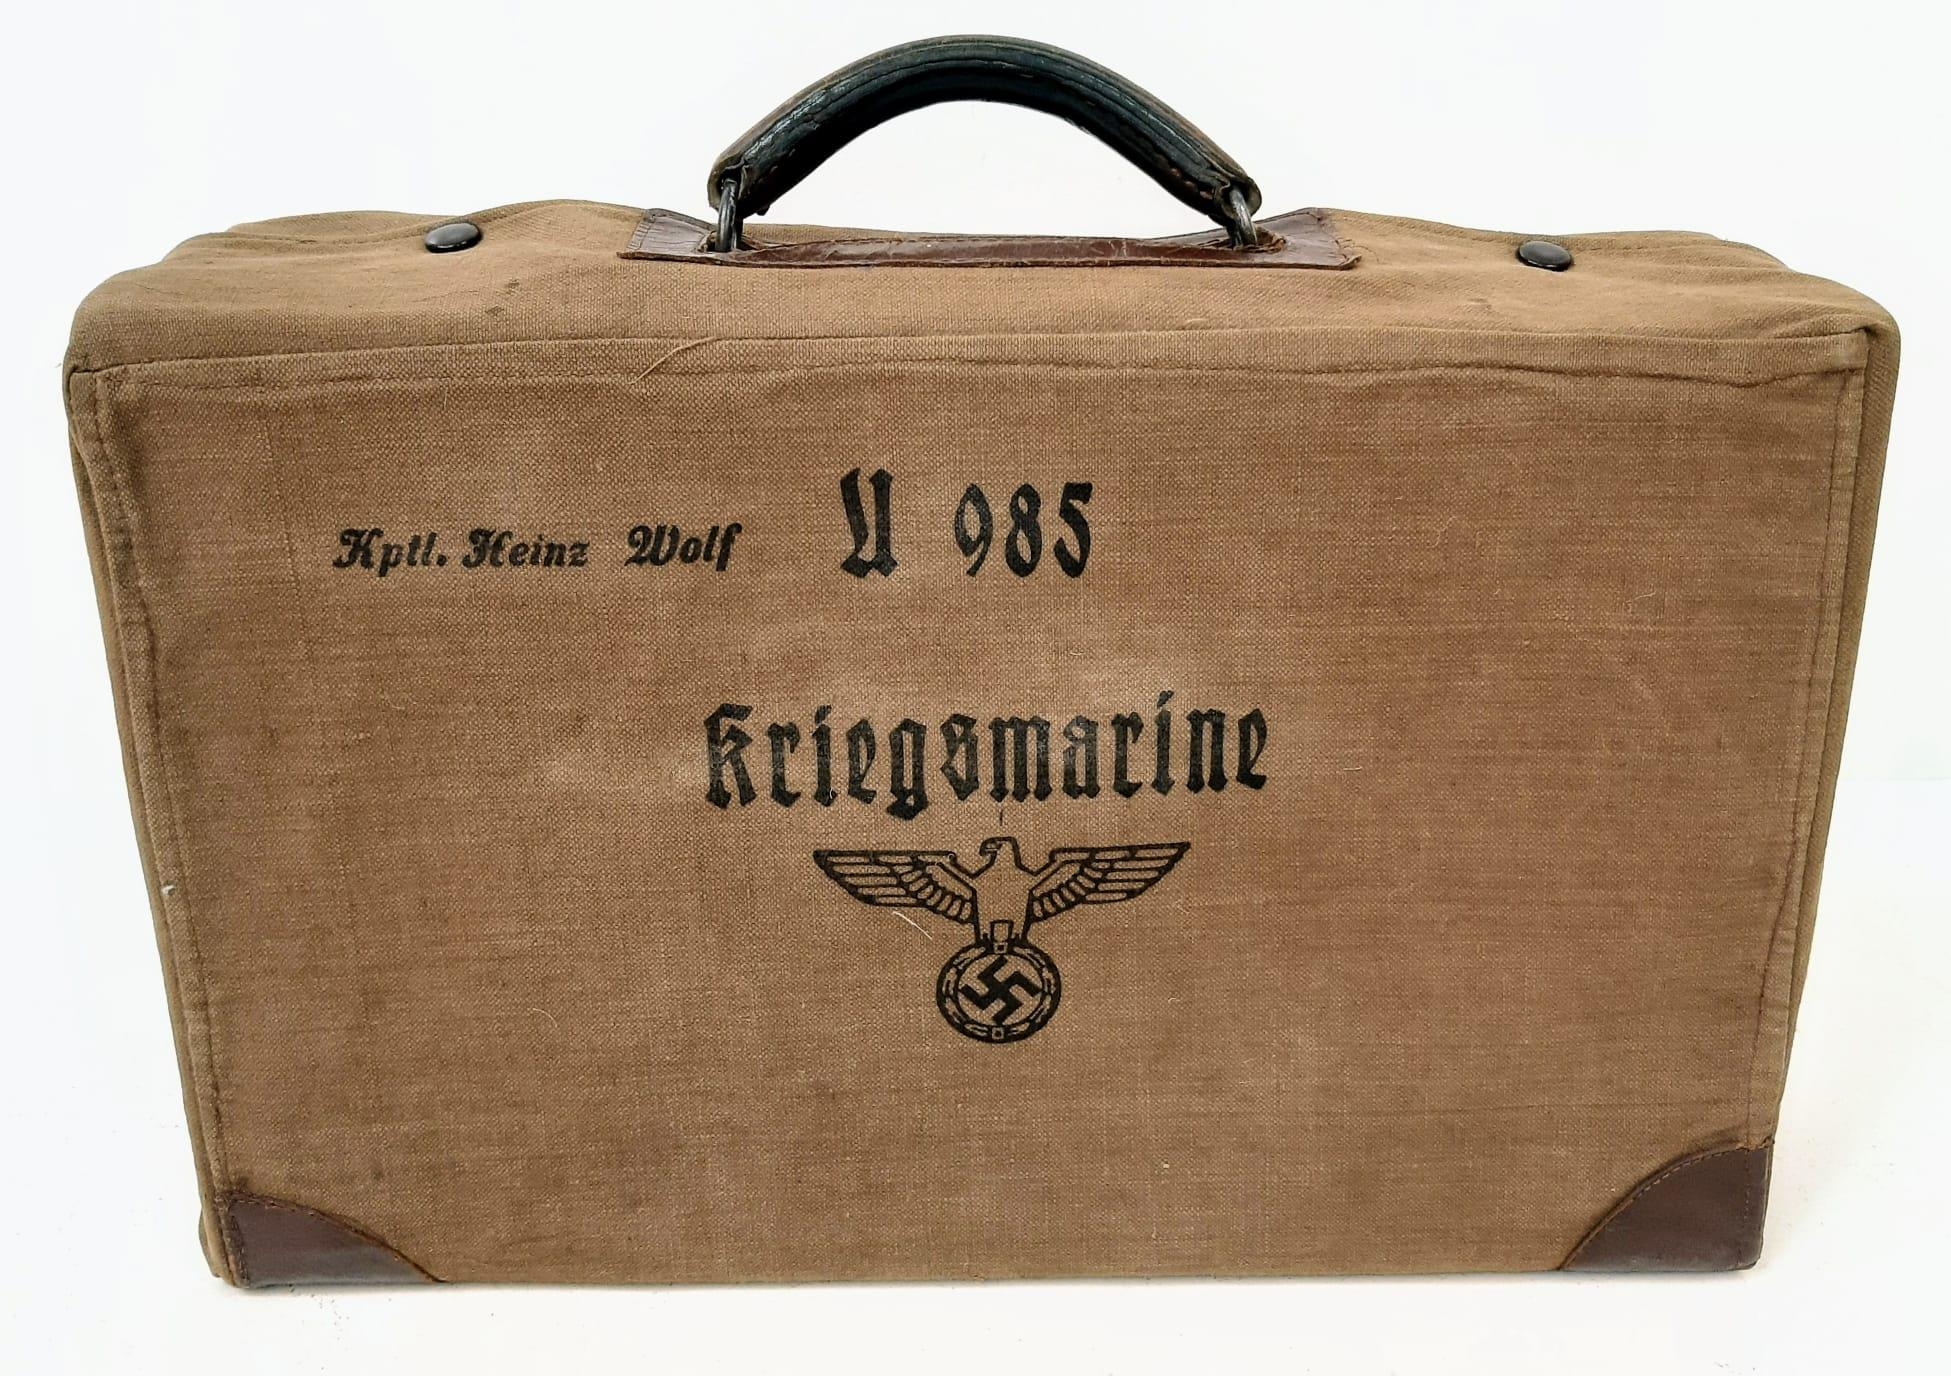 WW2 German Kriegsmarine U-boat Officers Suitcase and Cover to Captain Lieutenant Heinz Wolf U-985.